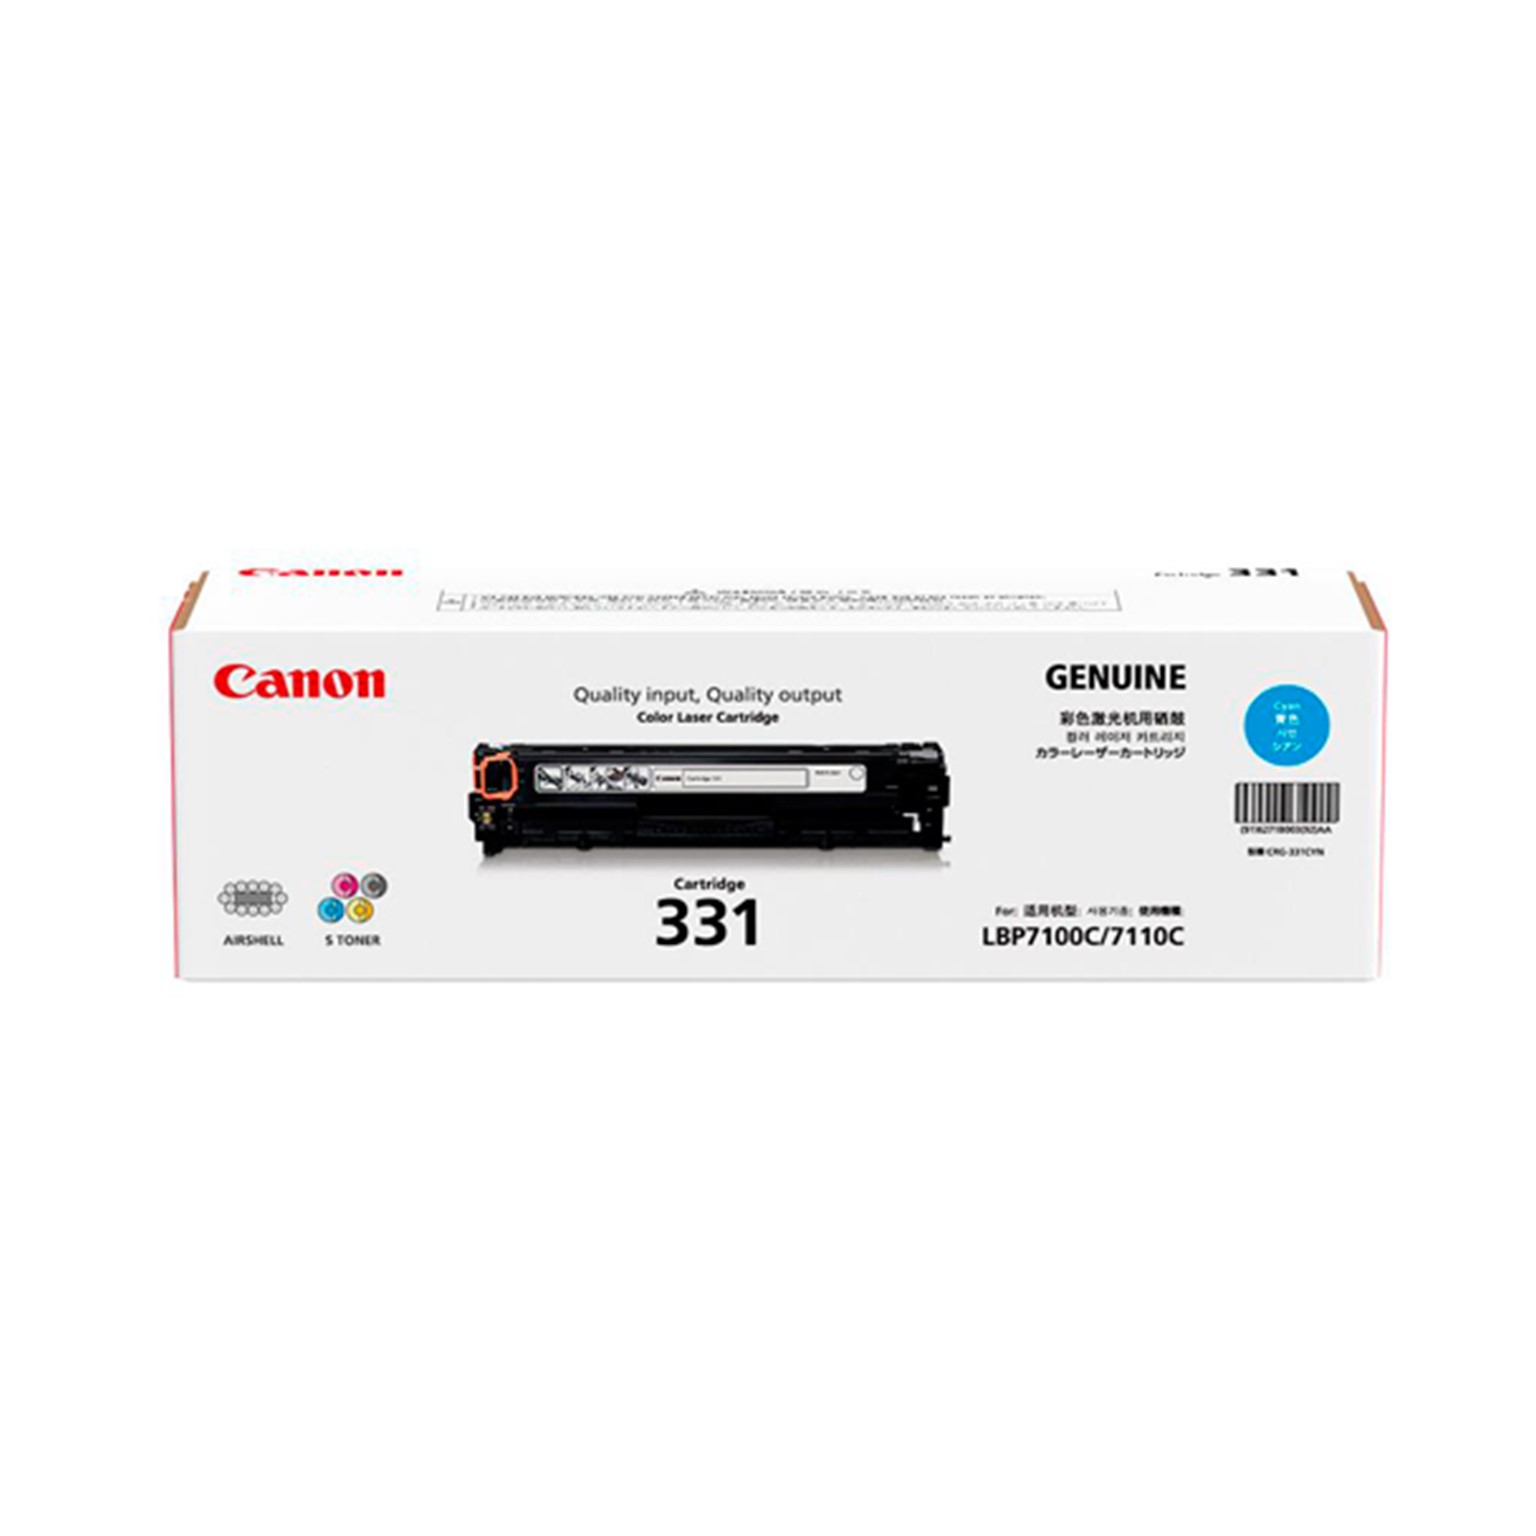 Canon Cartridge-331 Toner Cyan